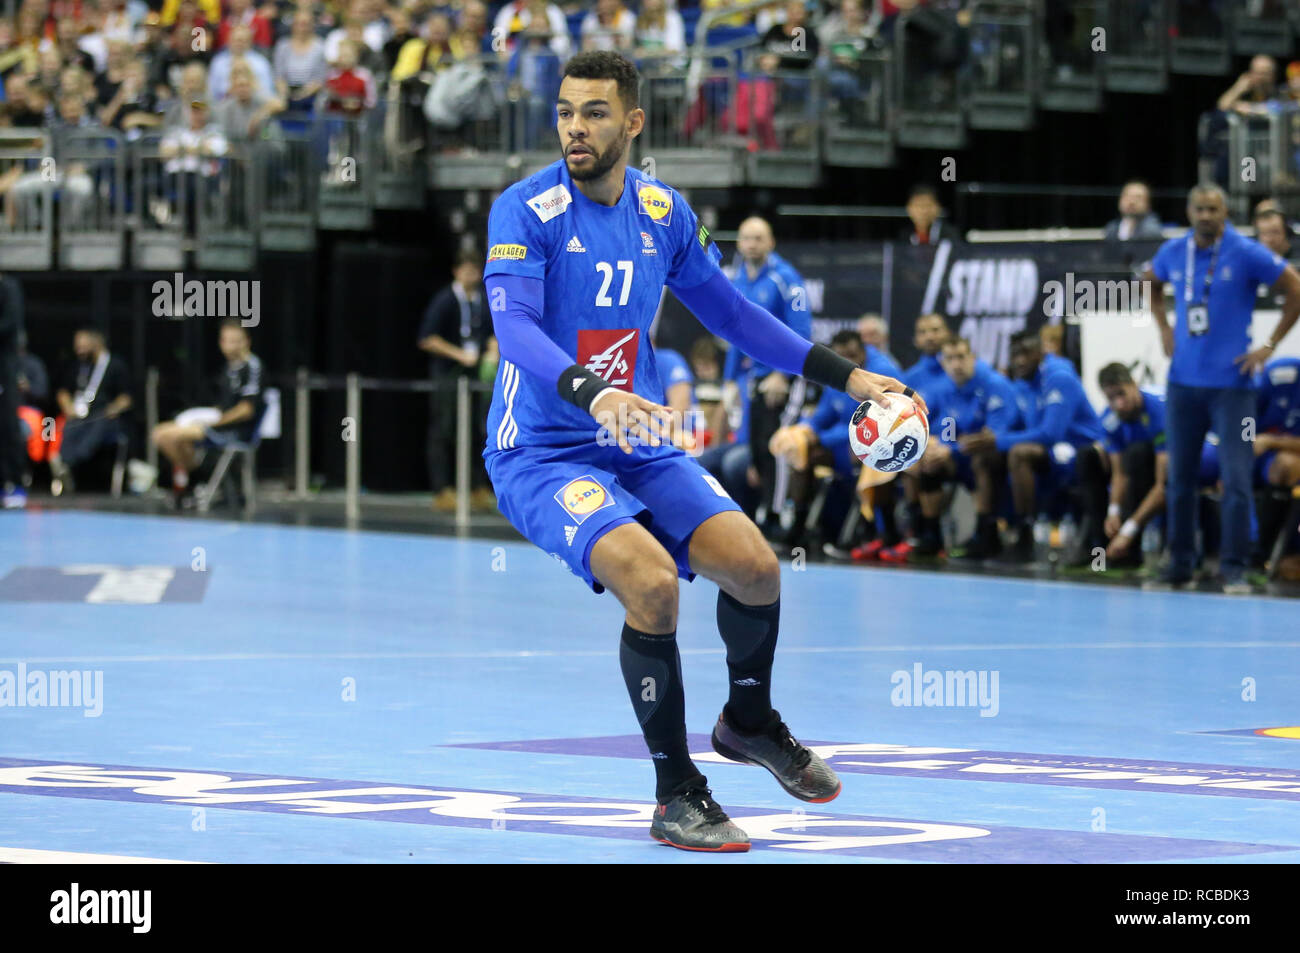 Berlin, Germany. 14th Jan, 2019. Handball IHF Men's World Championship: Adrien Dipanda for France Credit: Mickael Chavet/Alamy Live News Stock Photo